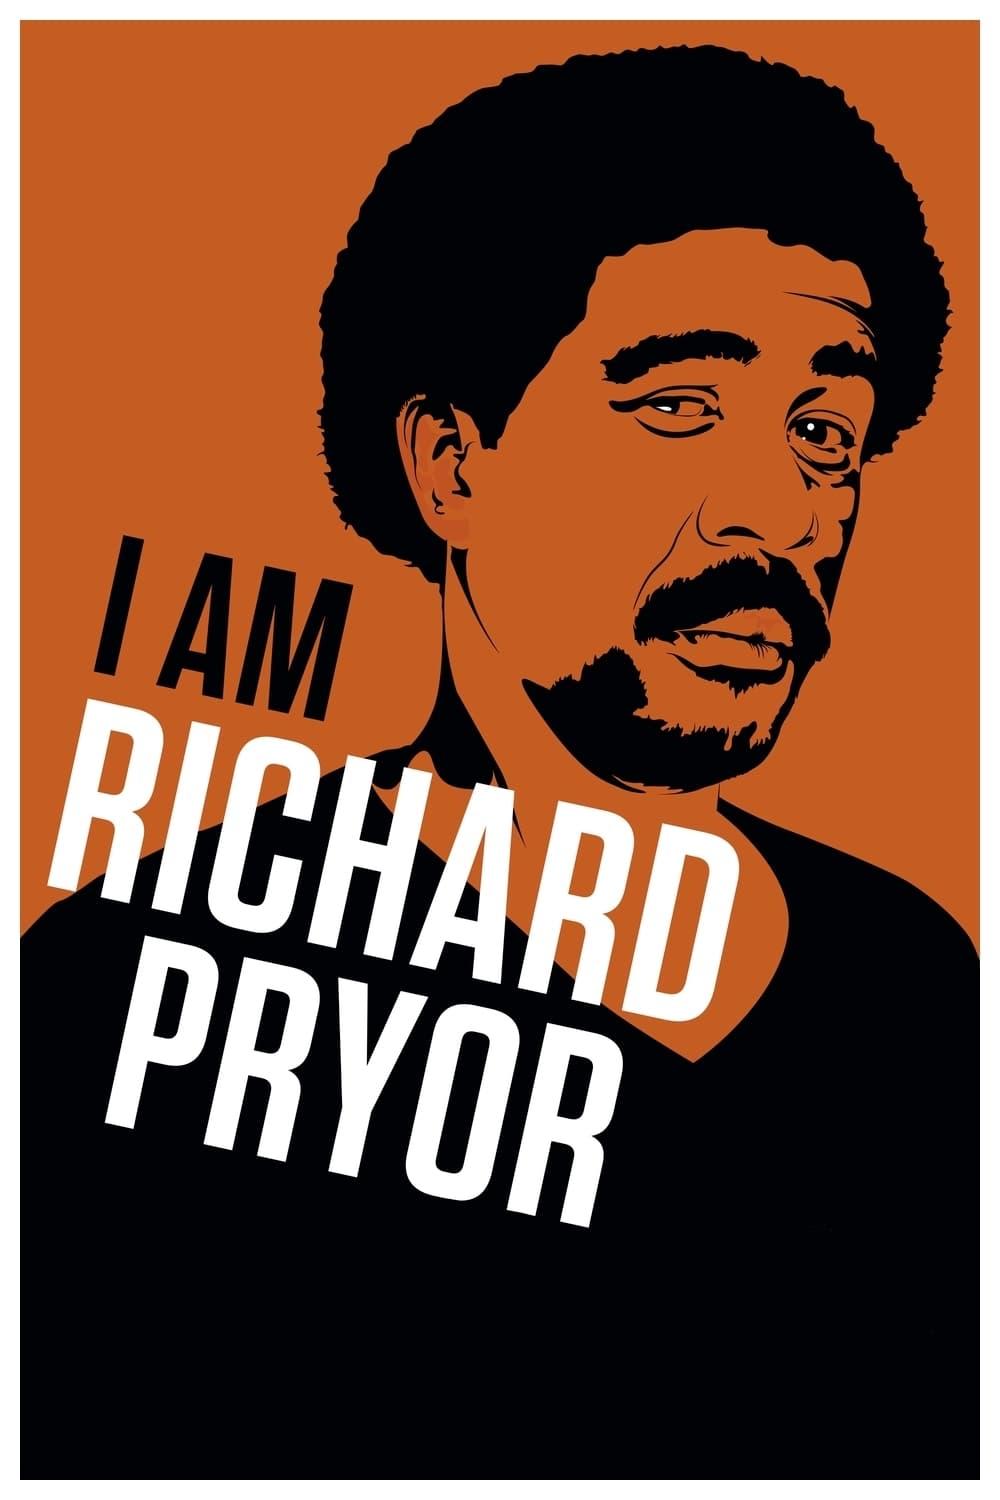 I Am Richard Pryor poster